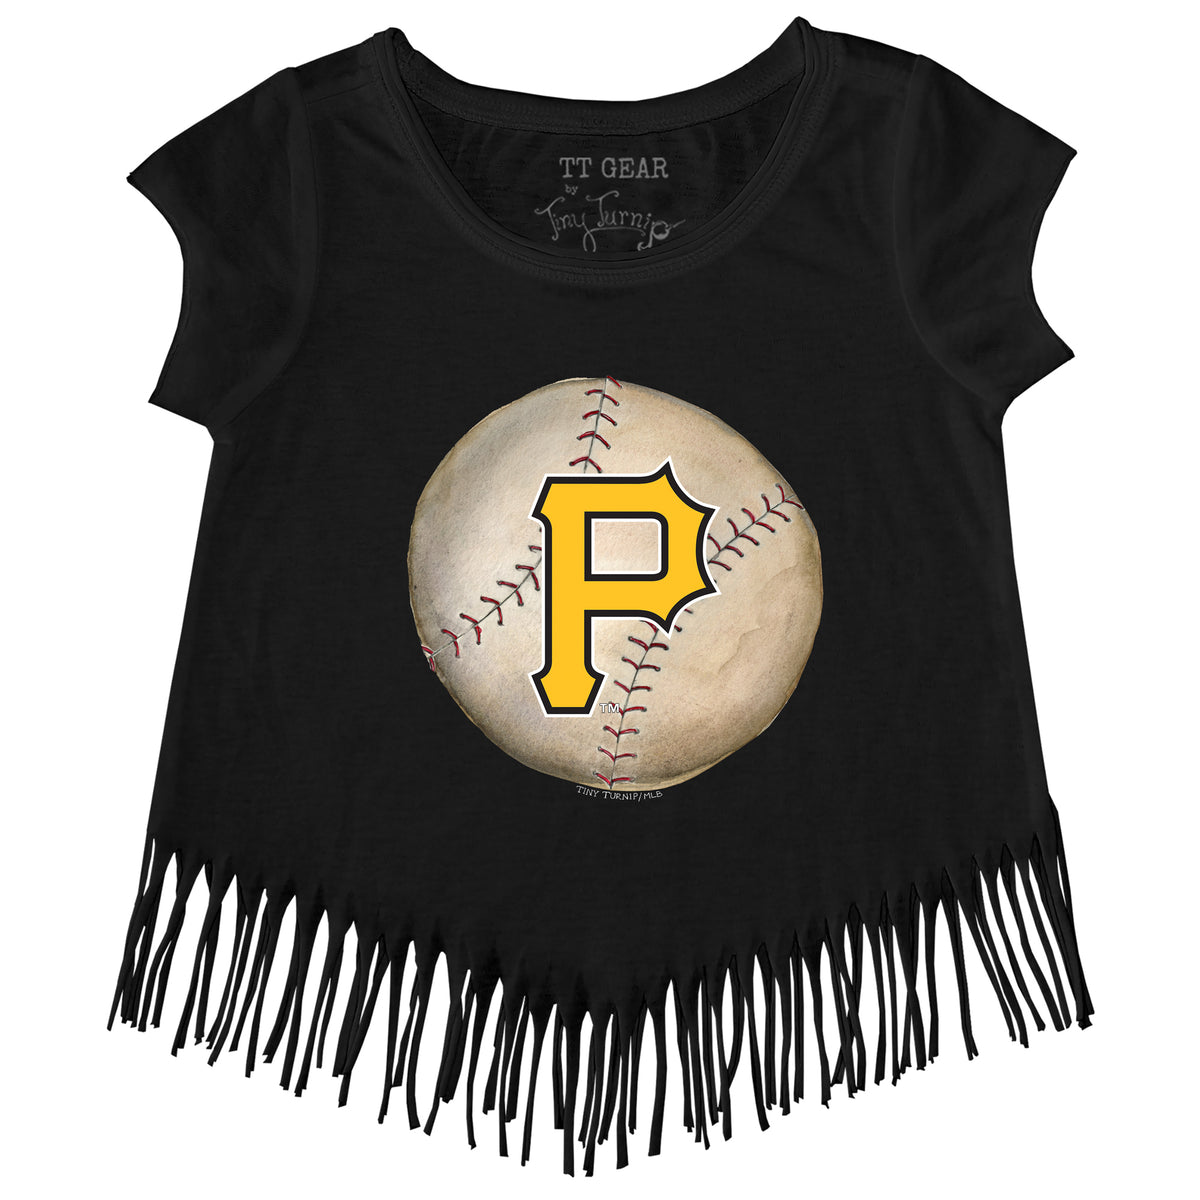 Women's Black/White Pittsburgh Pirates Plus Size V-Neck Jersey T-Shirt